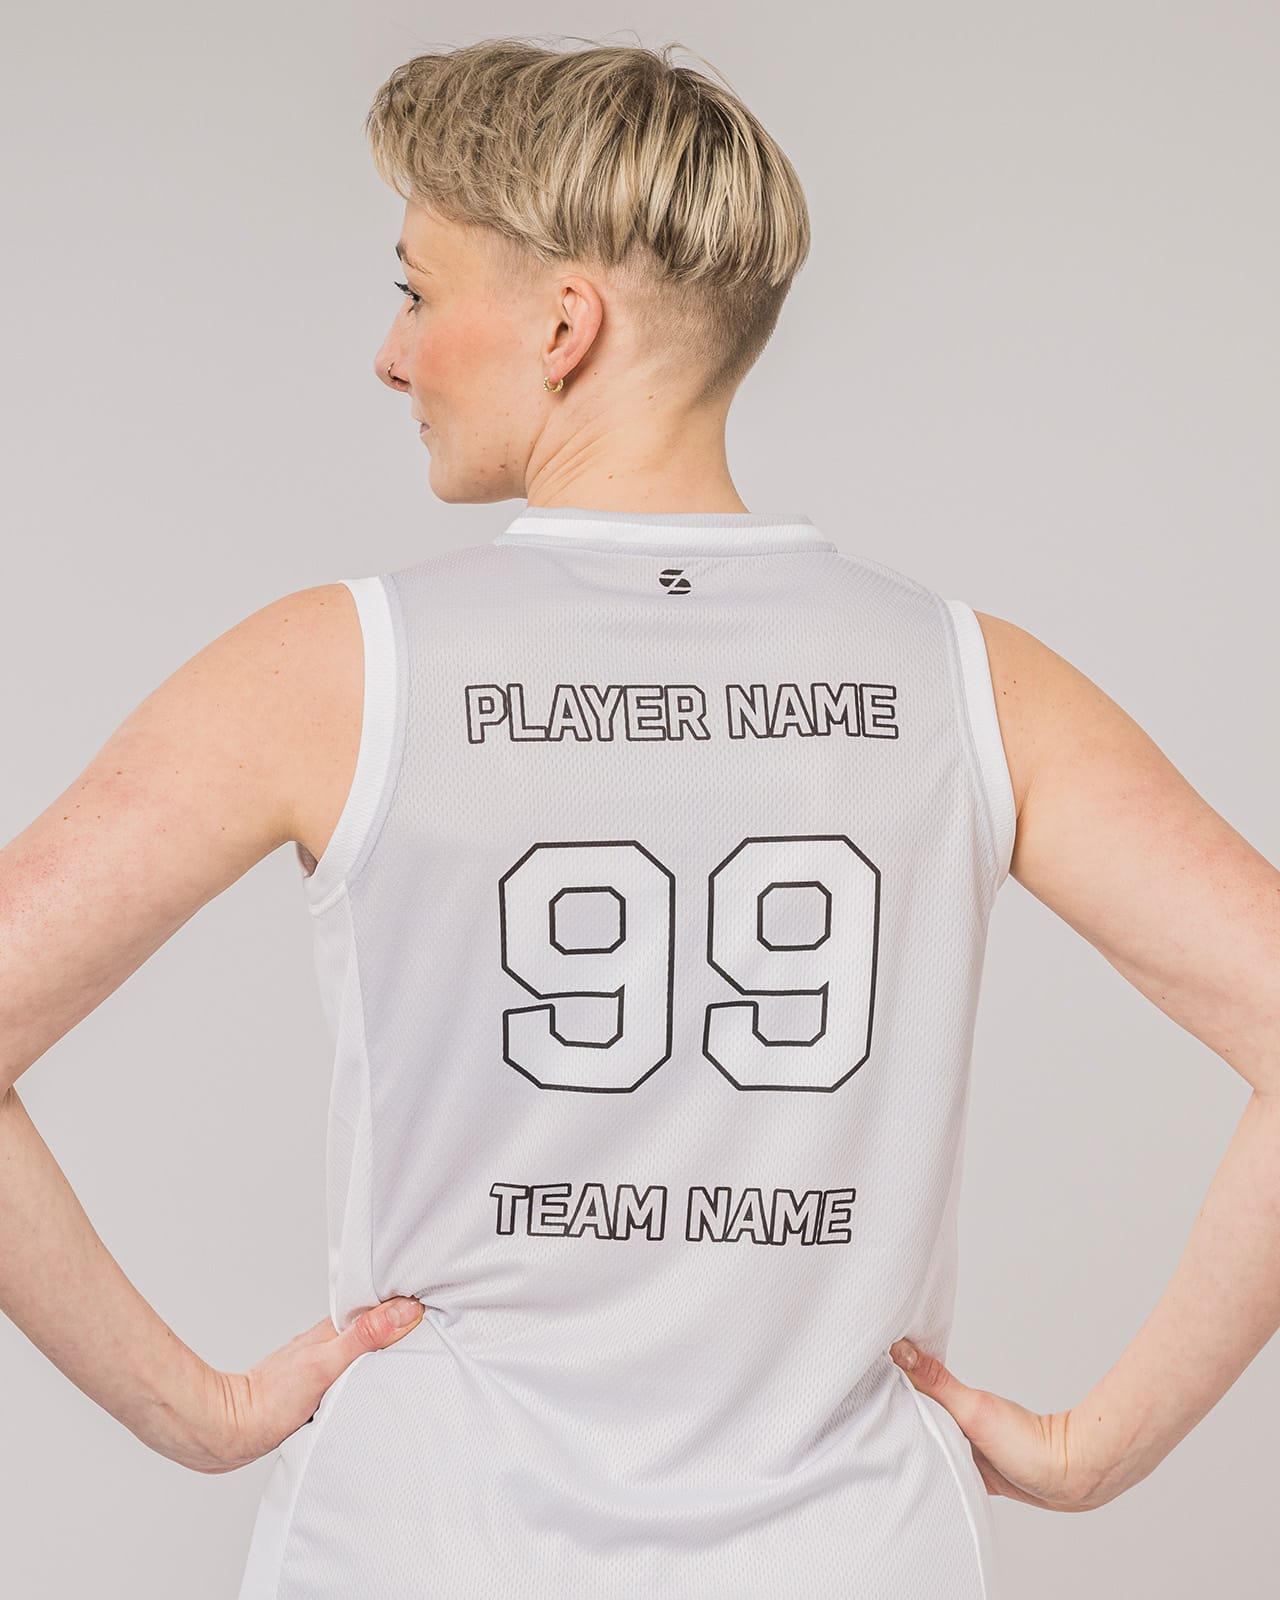 Swish women’s basketball jersey